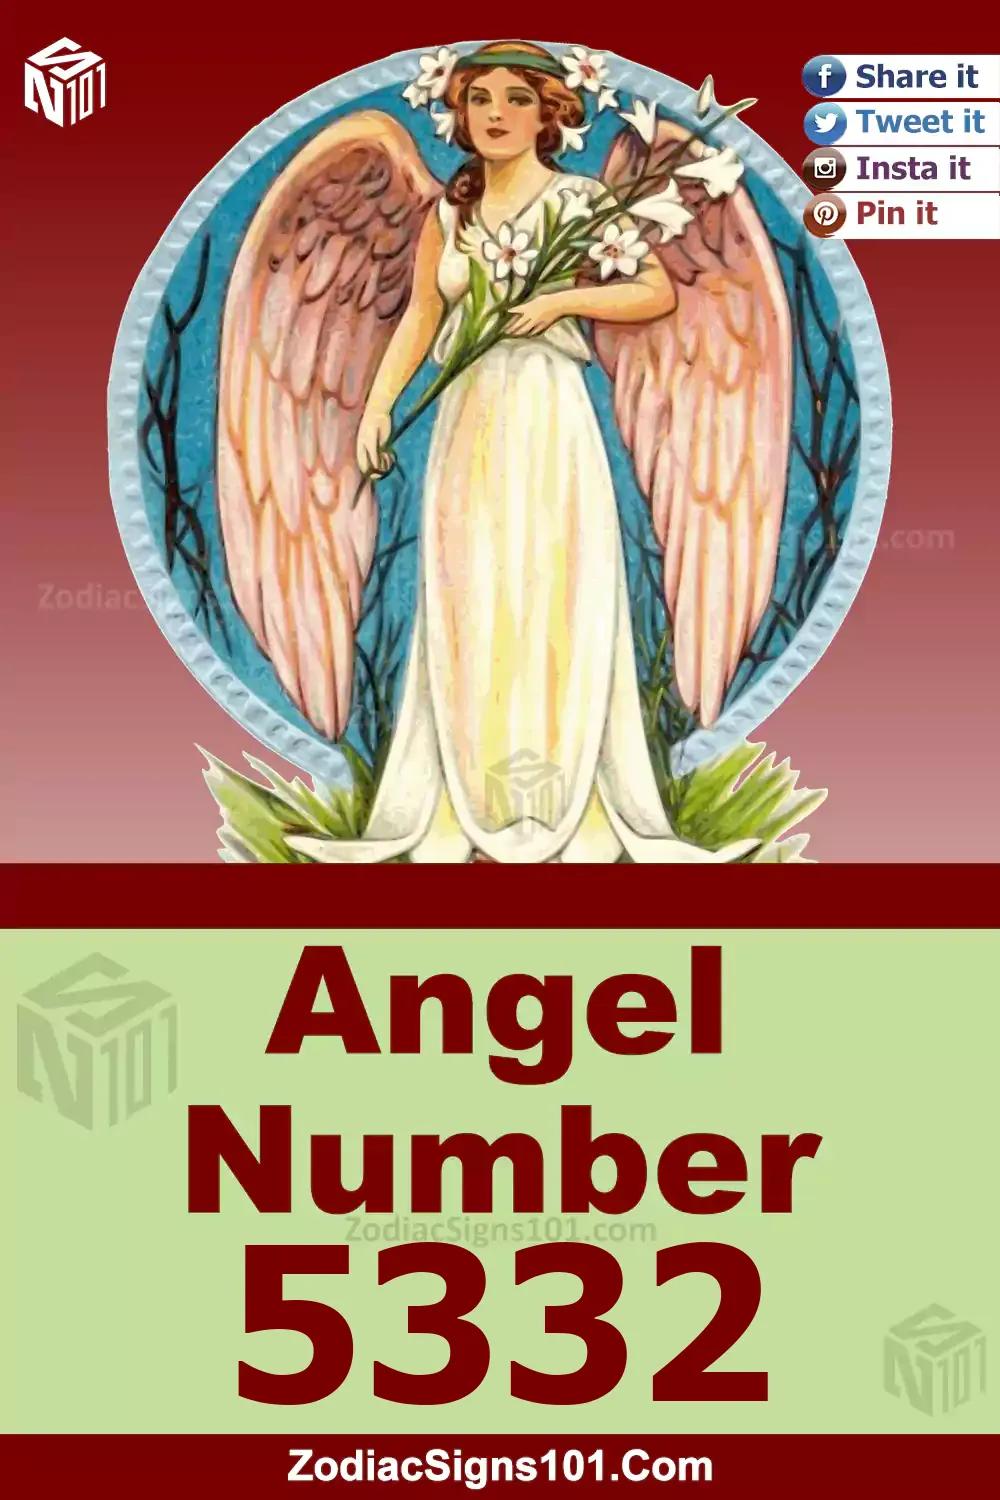 5332-Angel-Number-Meaning.jpg